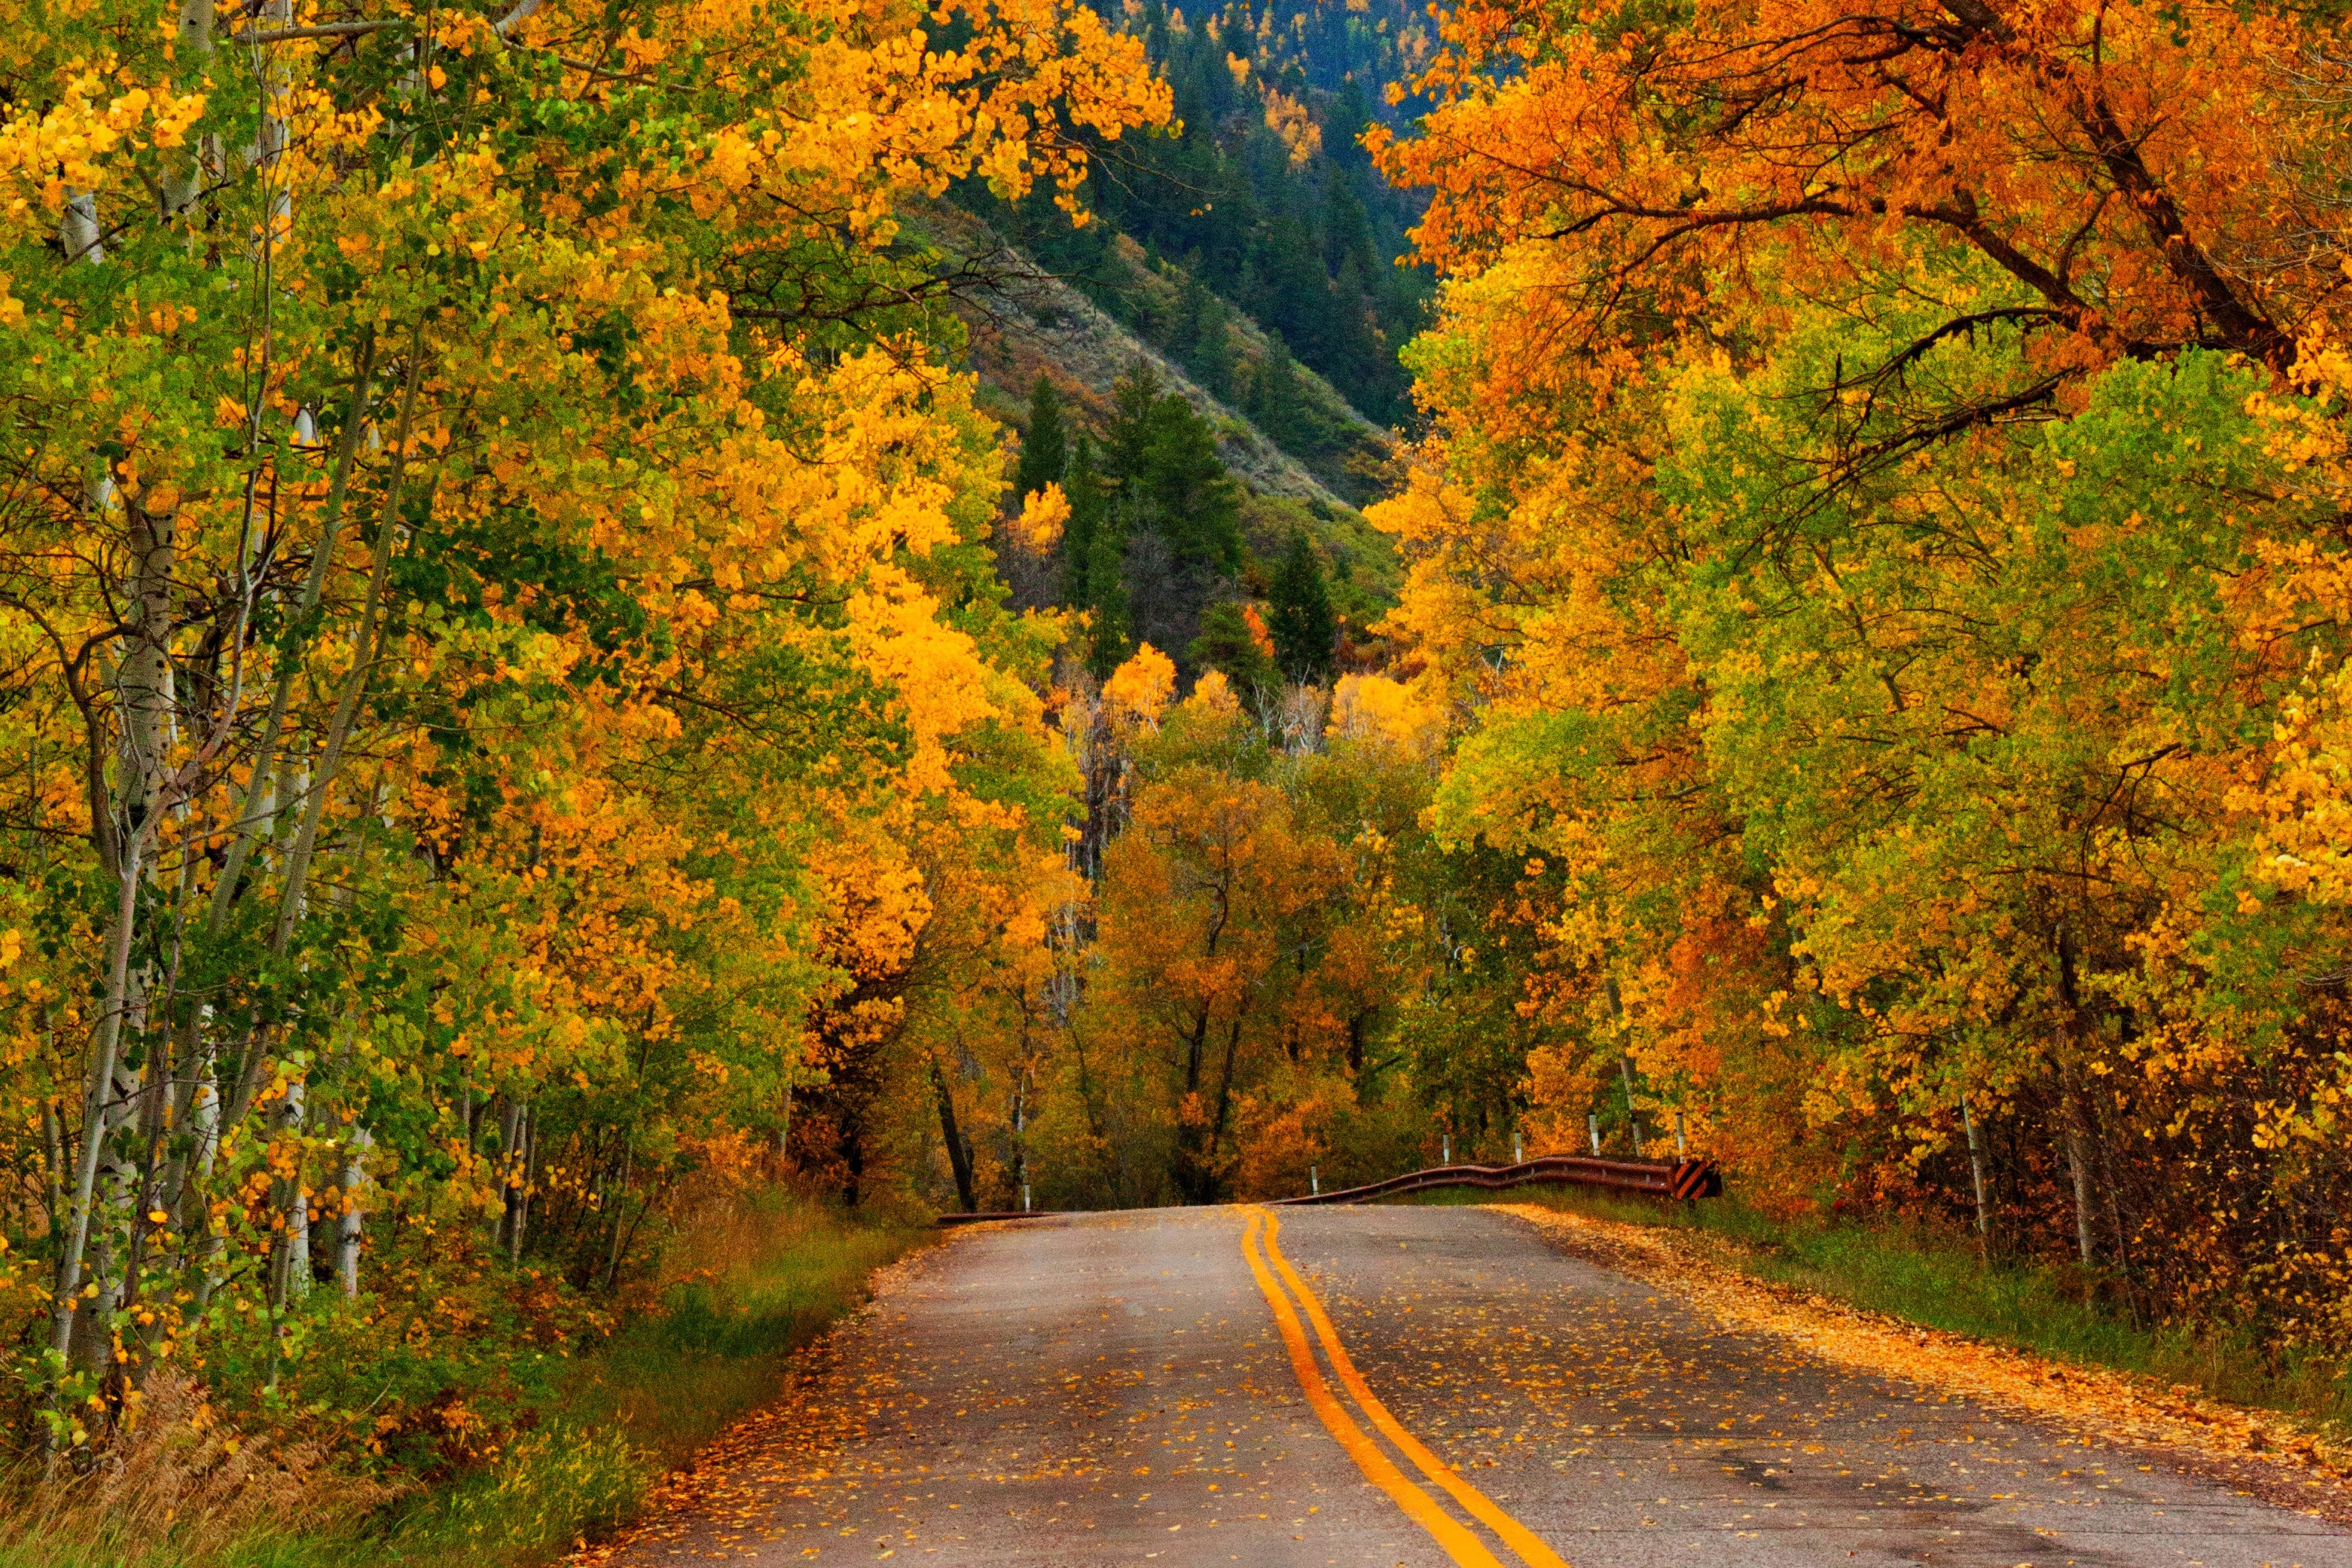 Картинки осени на рабочий. Природа осень. Дорога в осень. Осенняя дорога в лесу. Осень лес дорога.